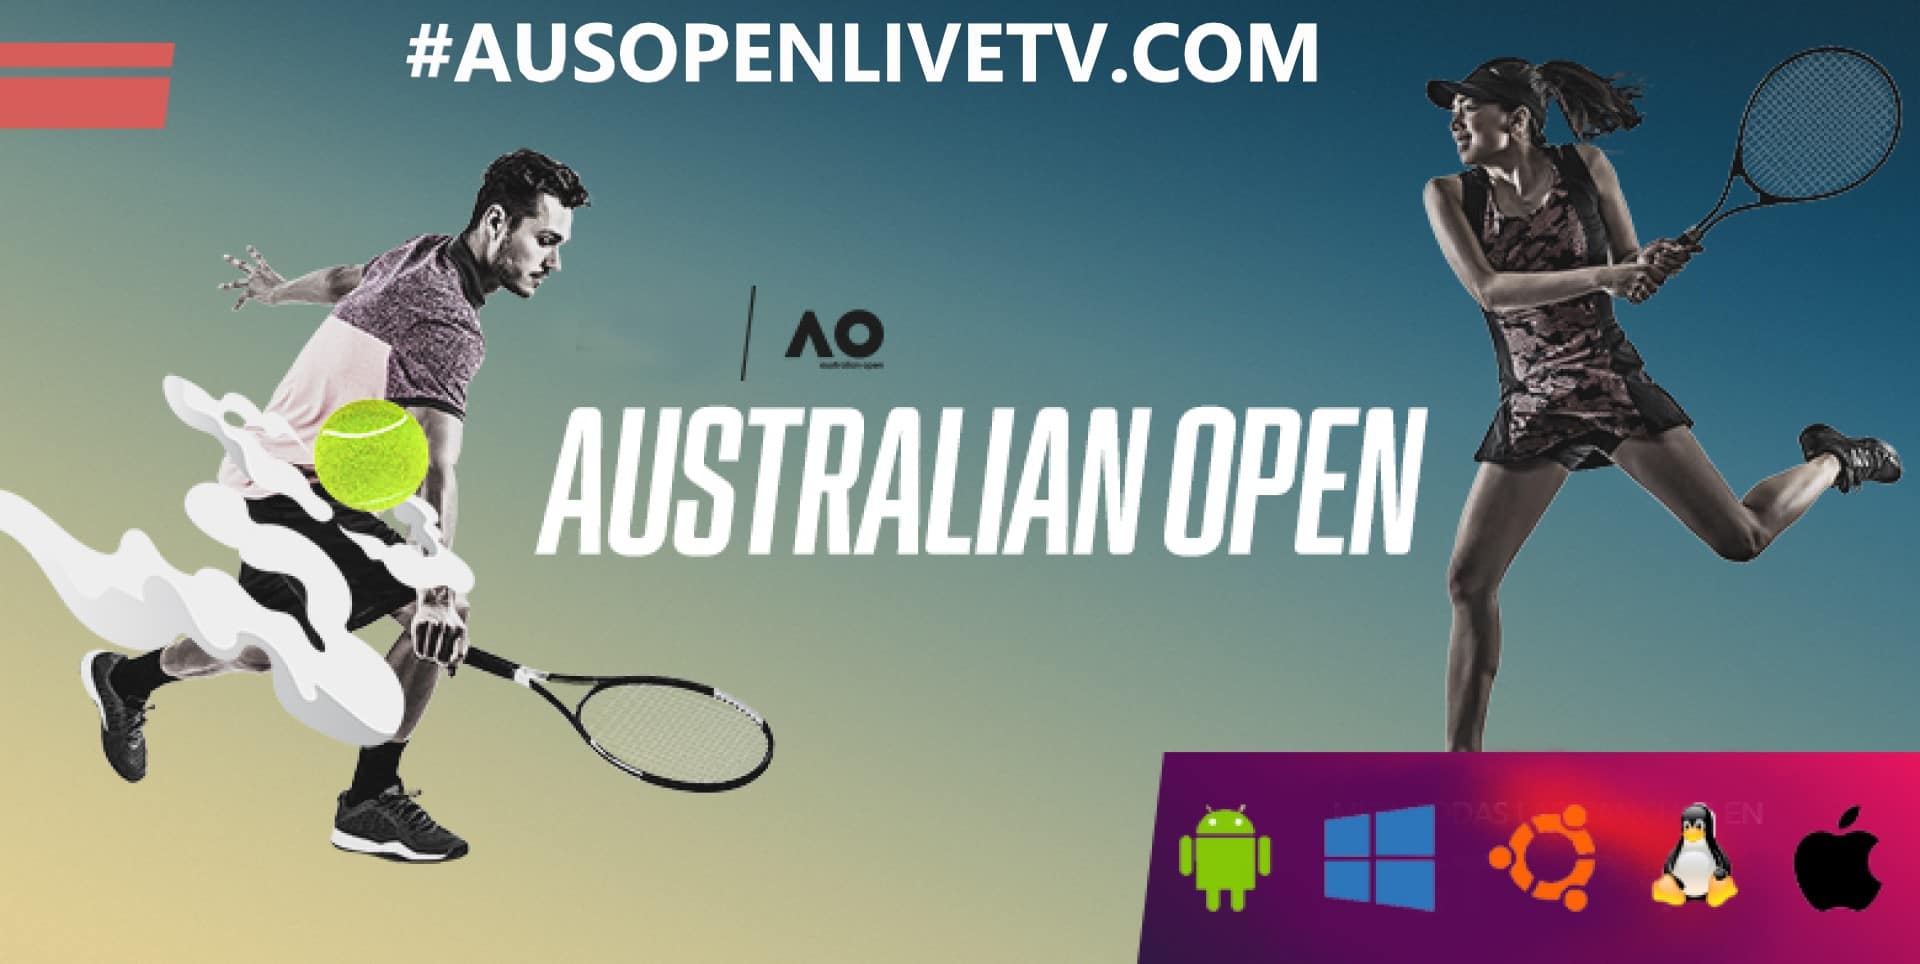 How to watch Australian Open 2017 live online